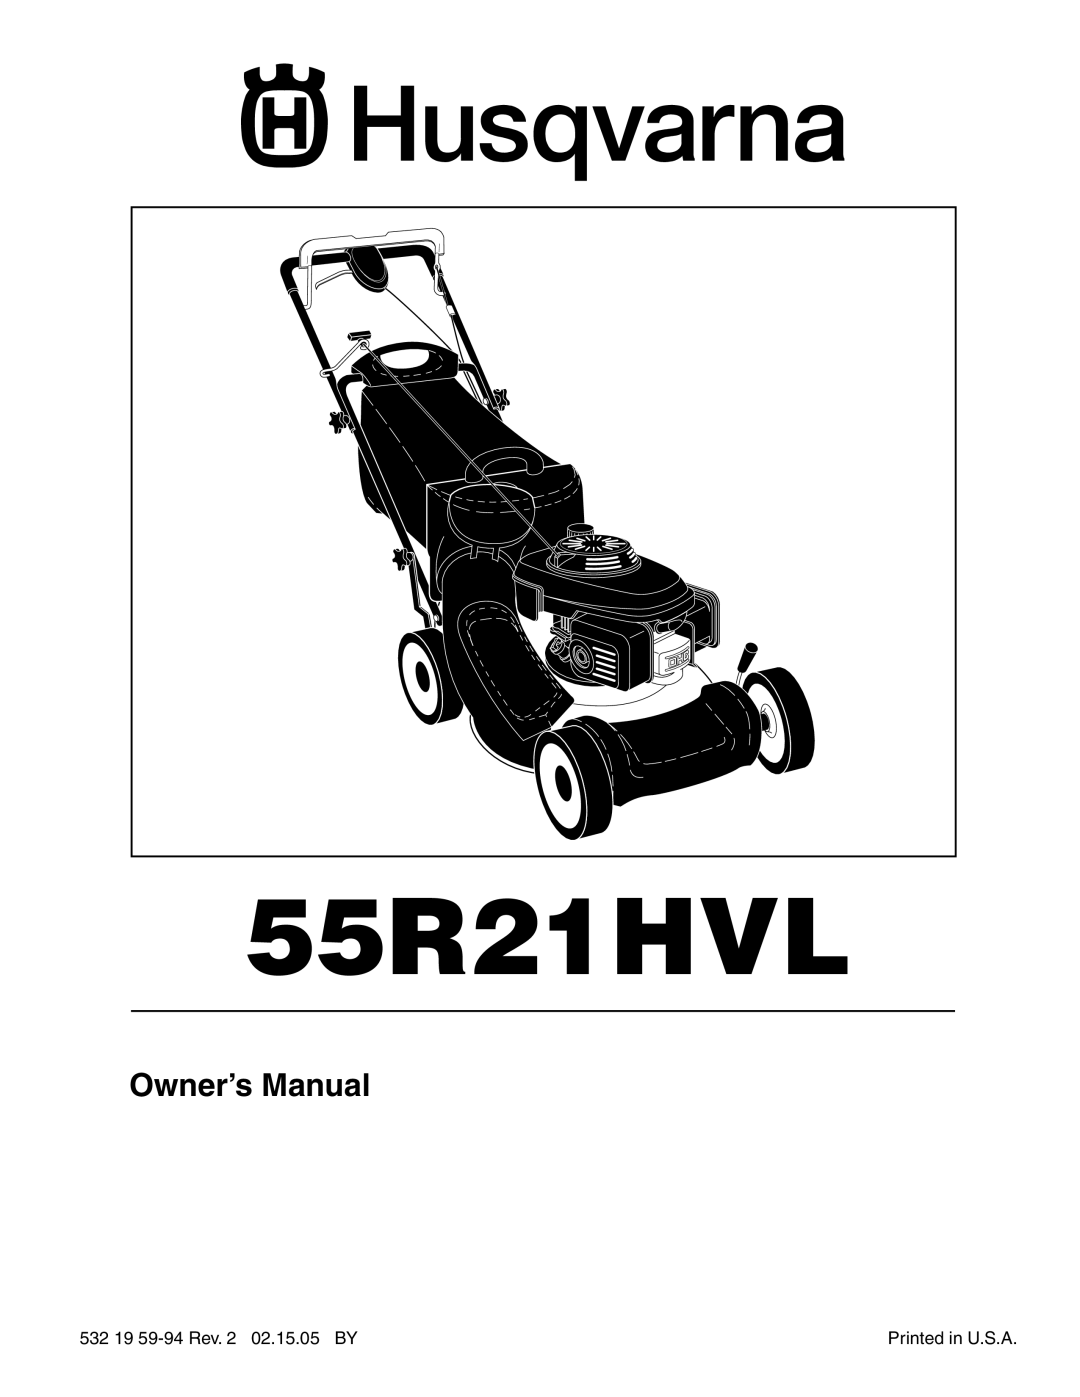 Husqvarna 55R21HVL owner manual Owner’s Manual 